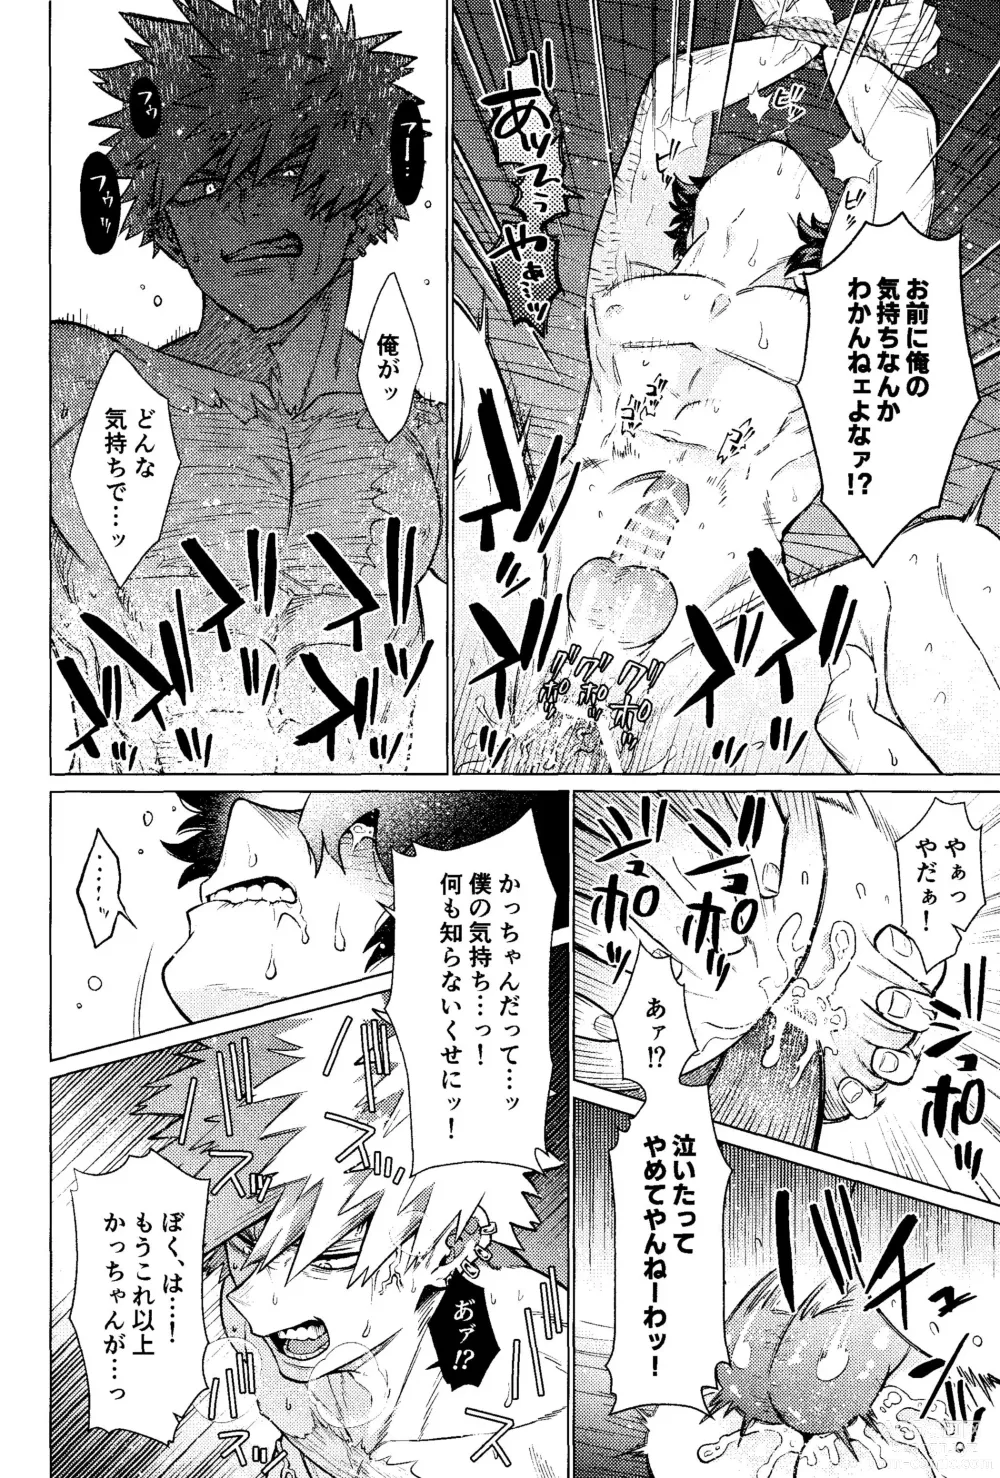 Page 33 of doujinshi Ubatte Nusumareru - Robbed and stolen